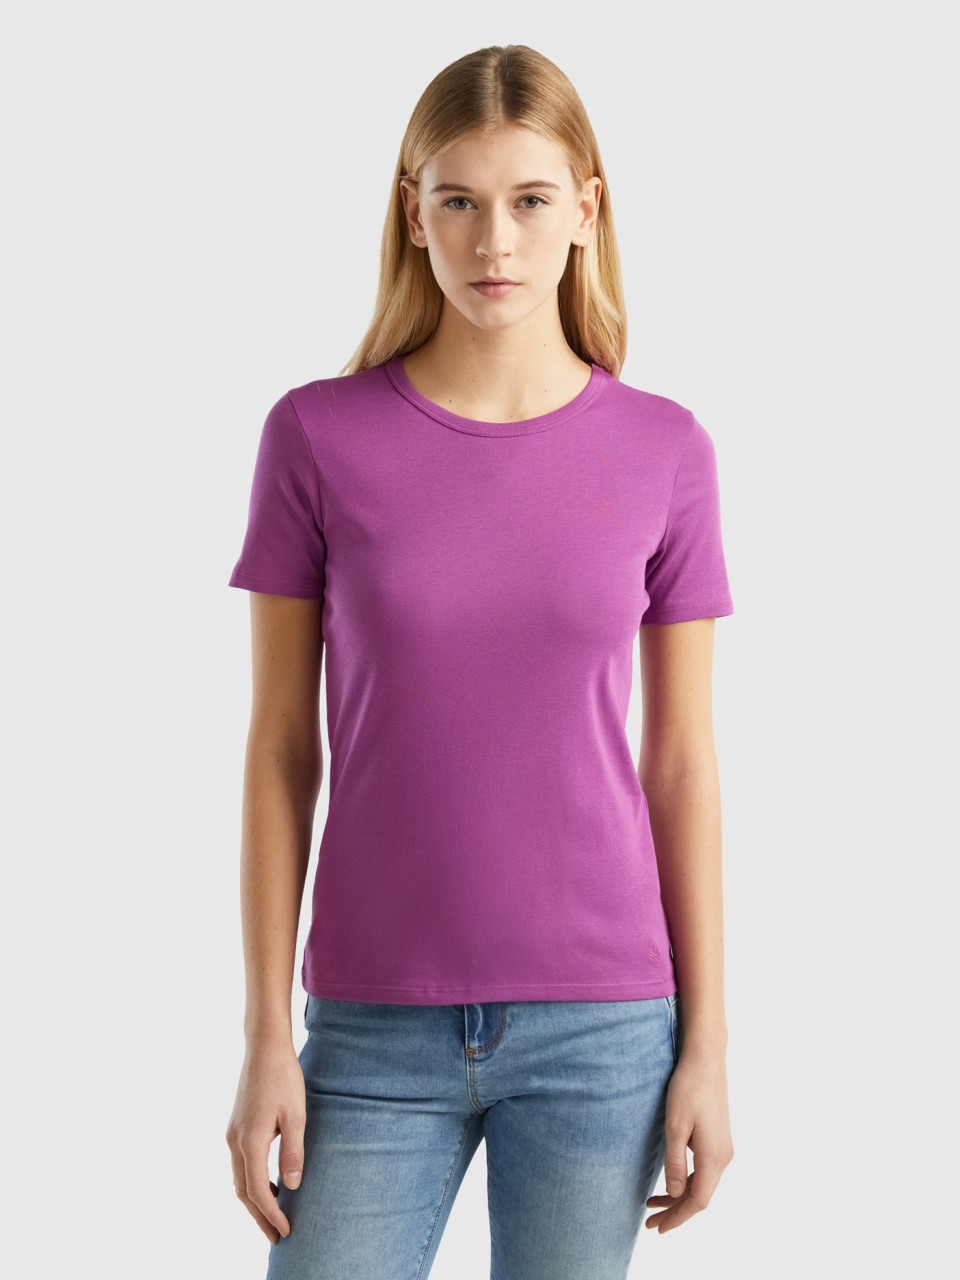 Benetton, Long Fiber Cotton T-shirt, Violet, Women